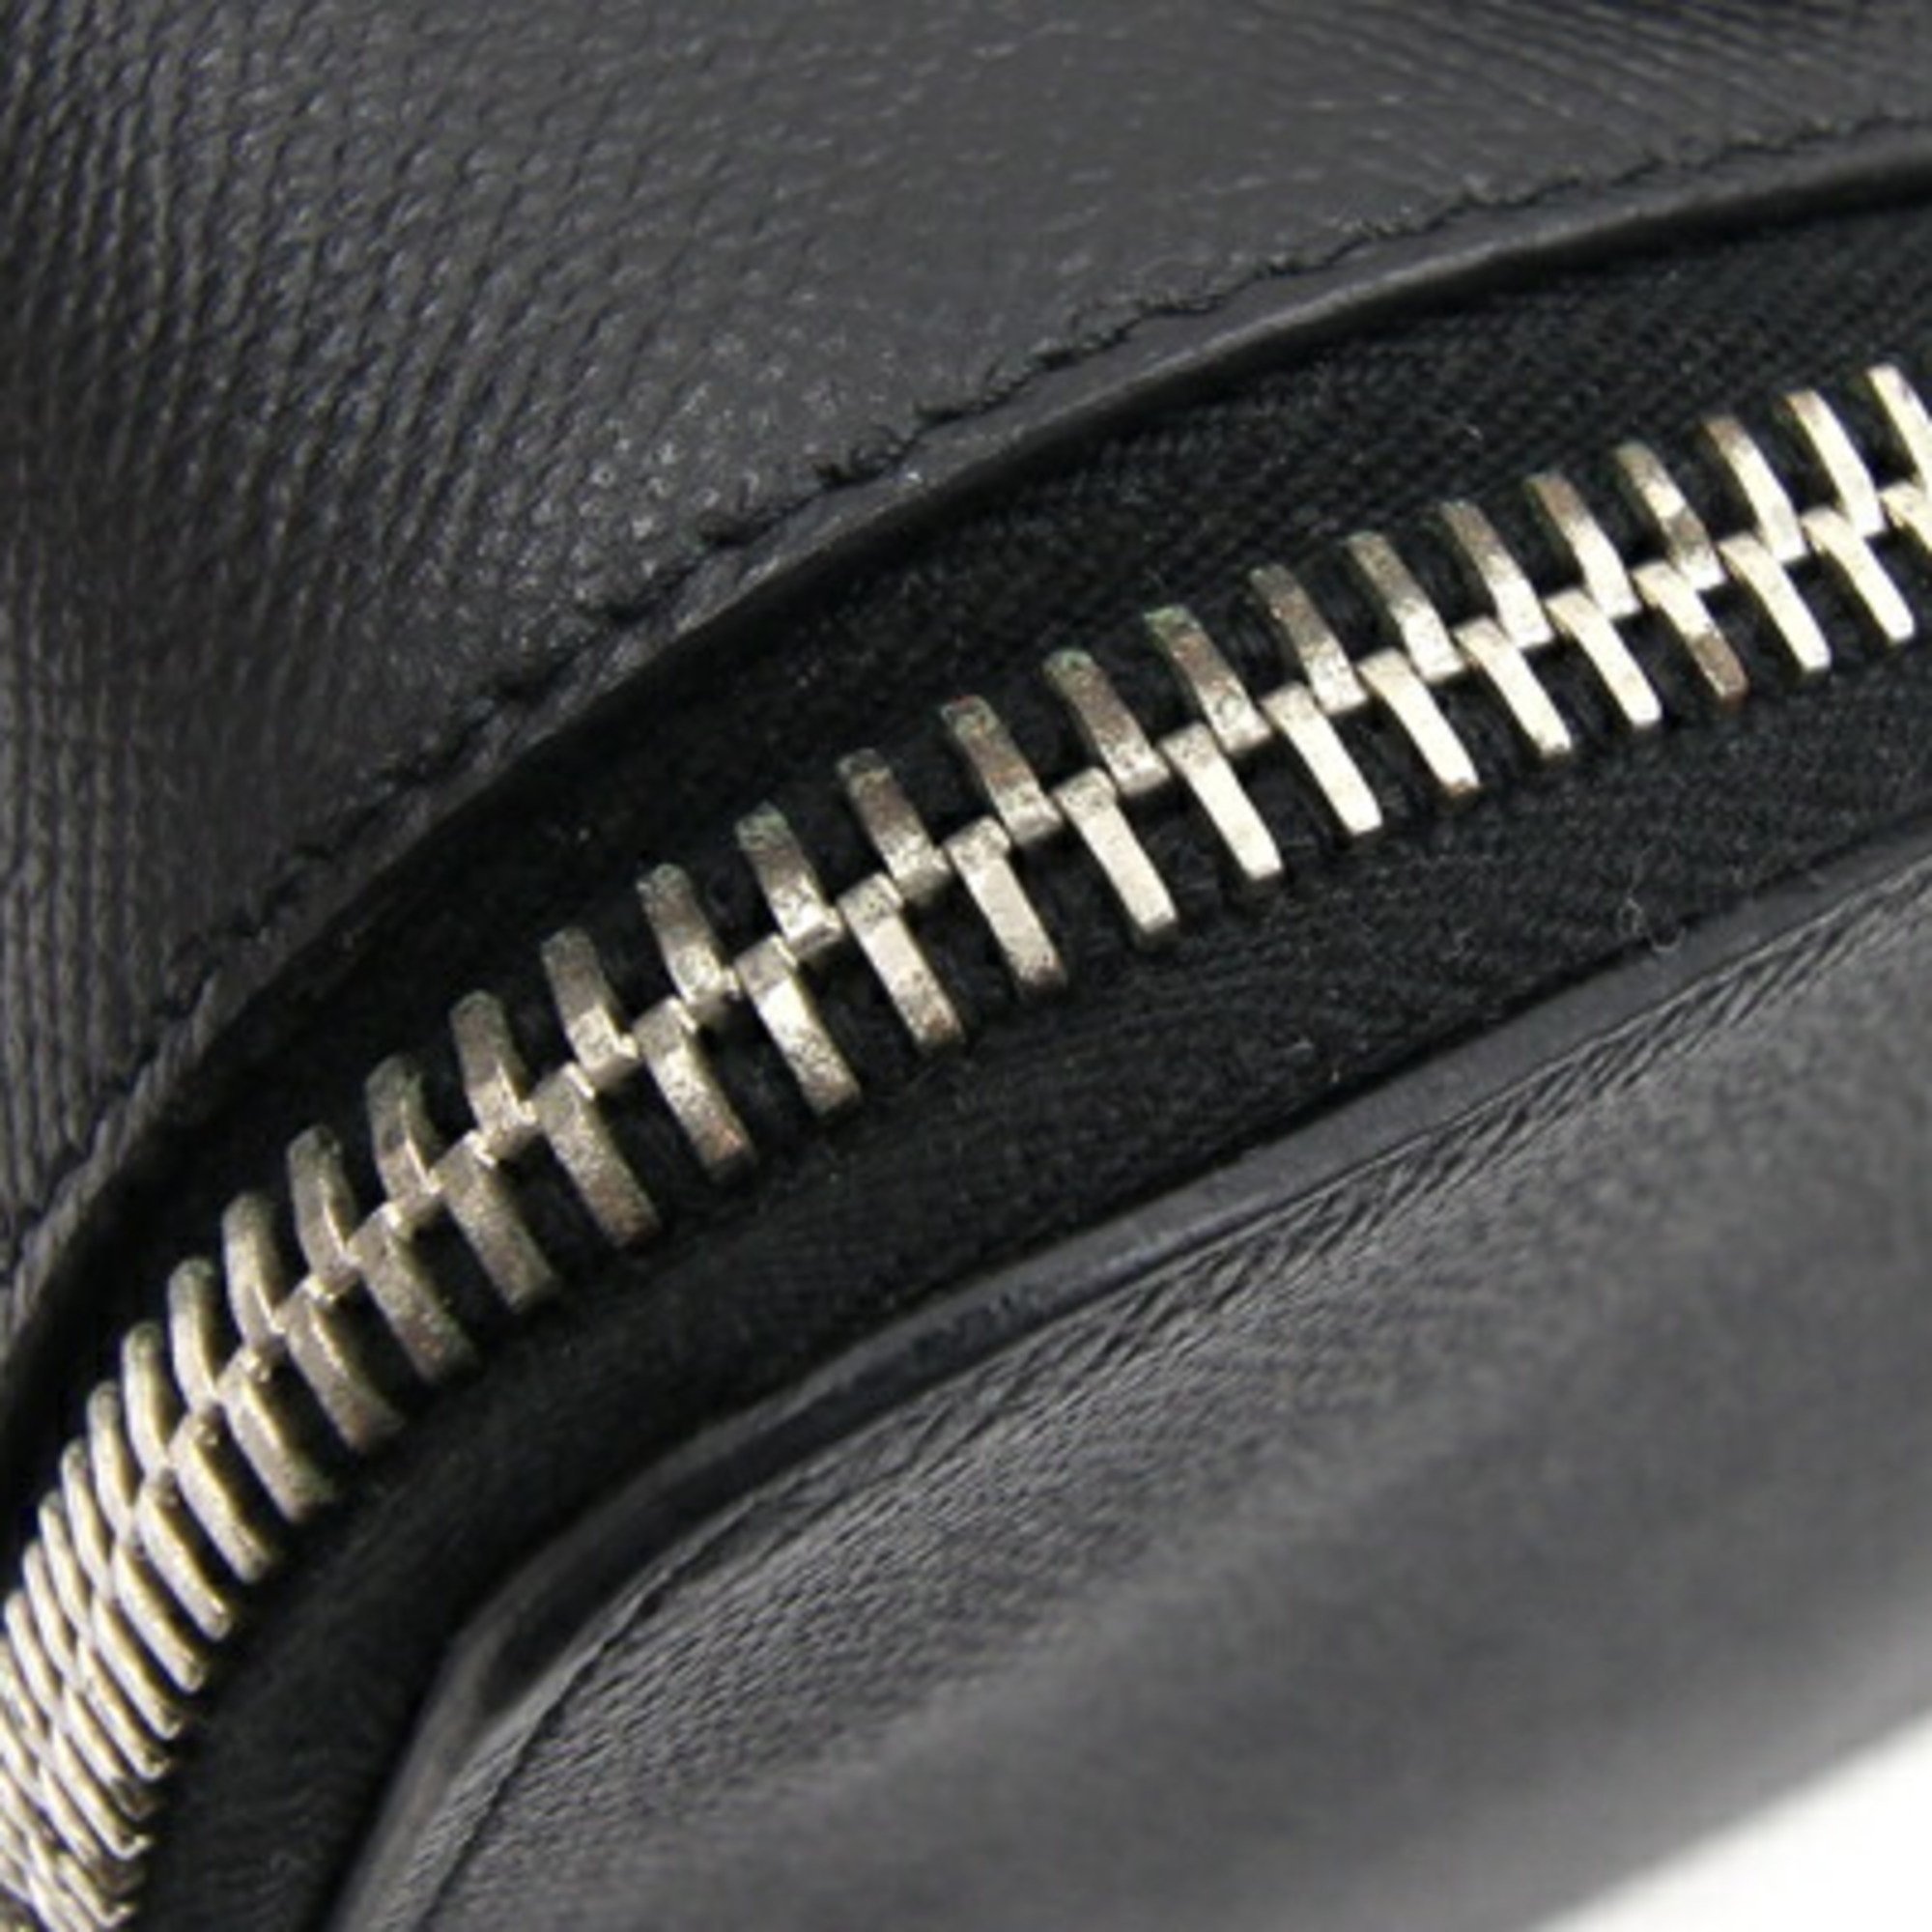 Dolce & Gabbana handbag, black leather, second bag, black, men's DOLCE&GABBANA